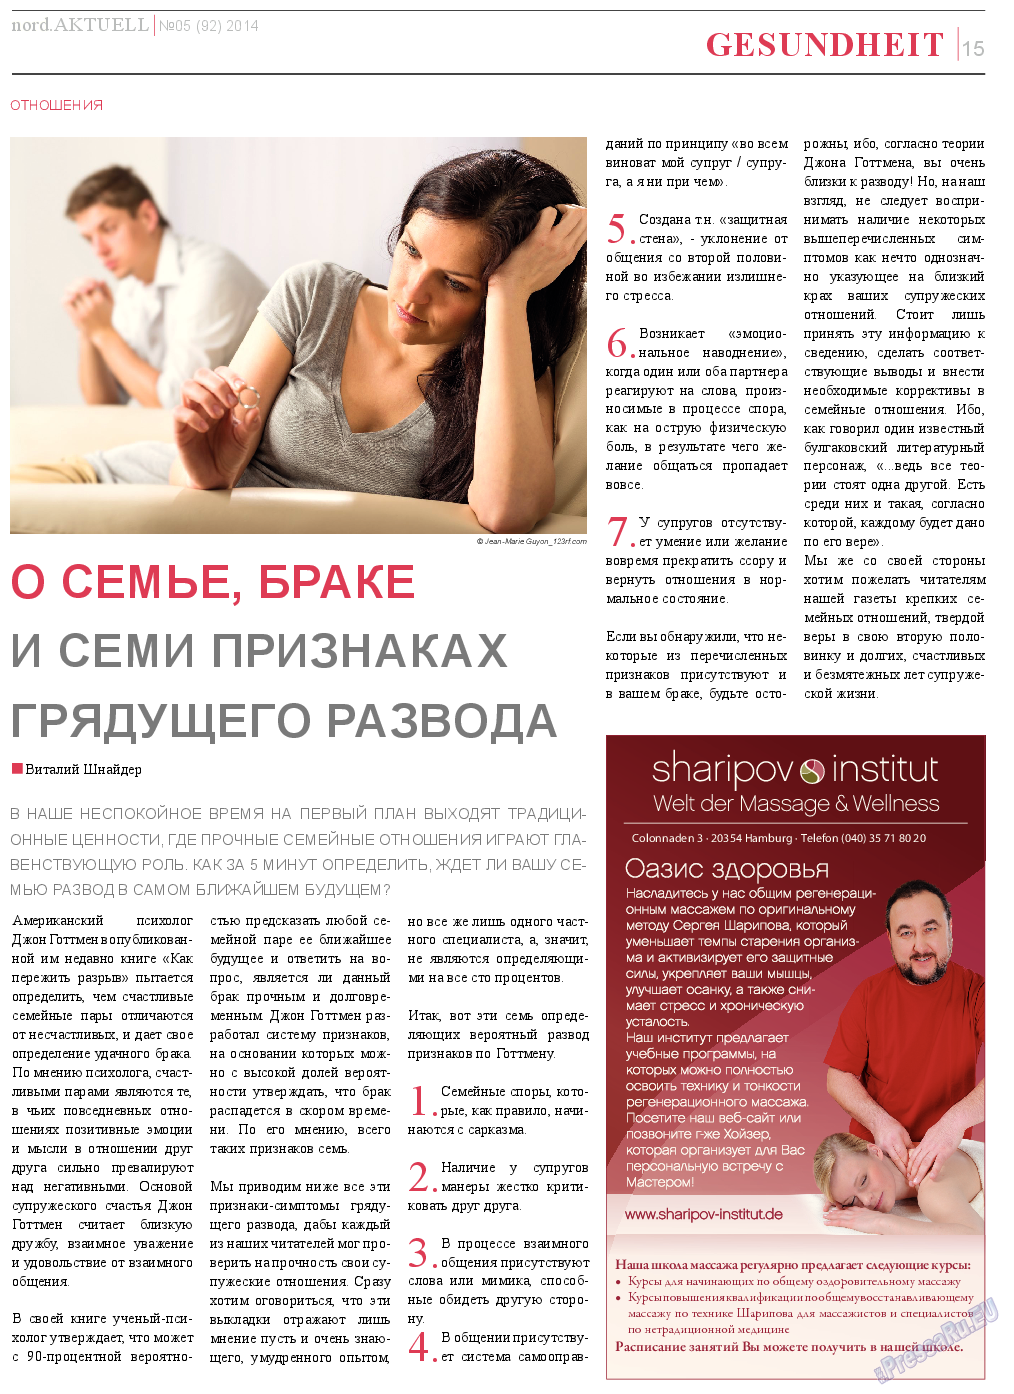 nord.Aktuell, газета. 2014 №5 стр.15